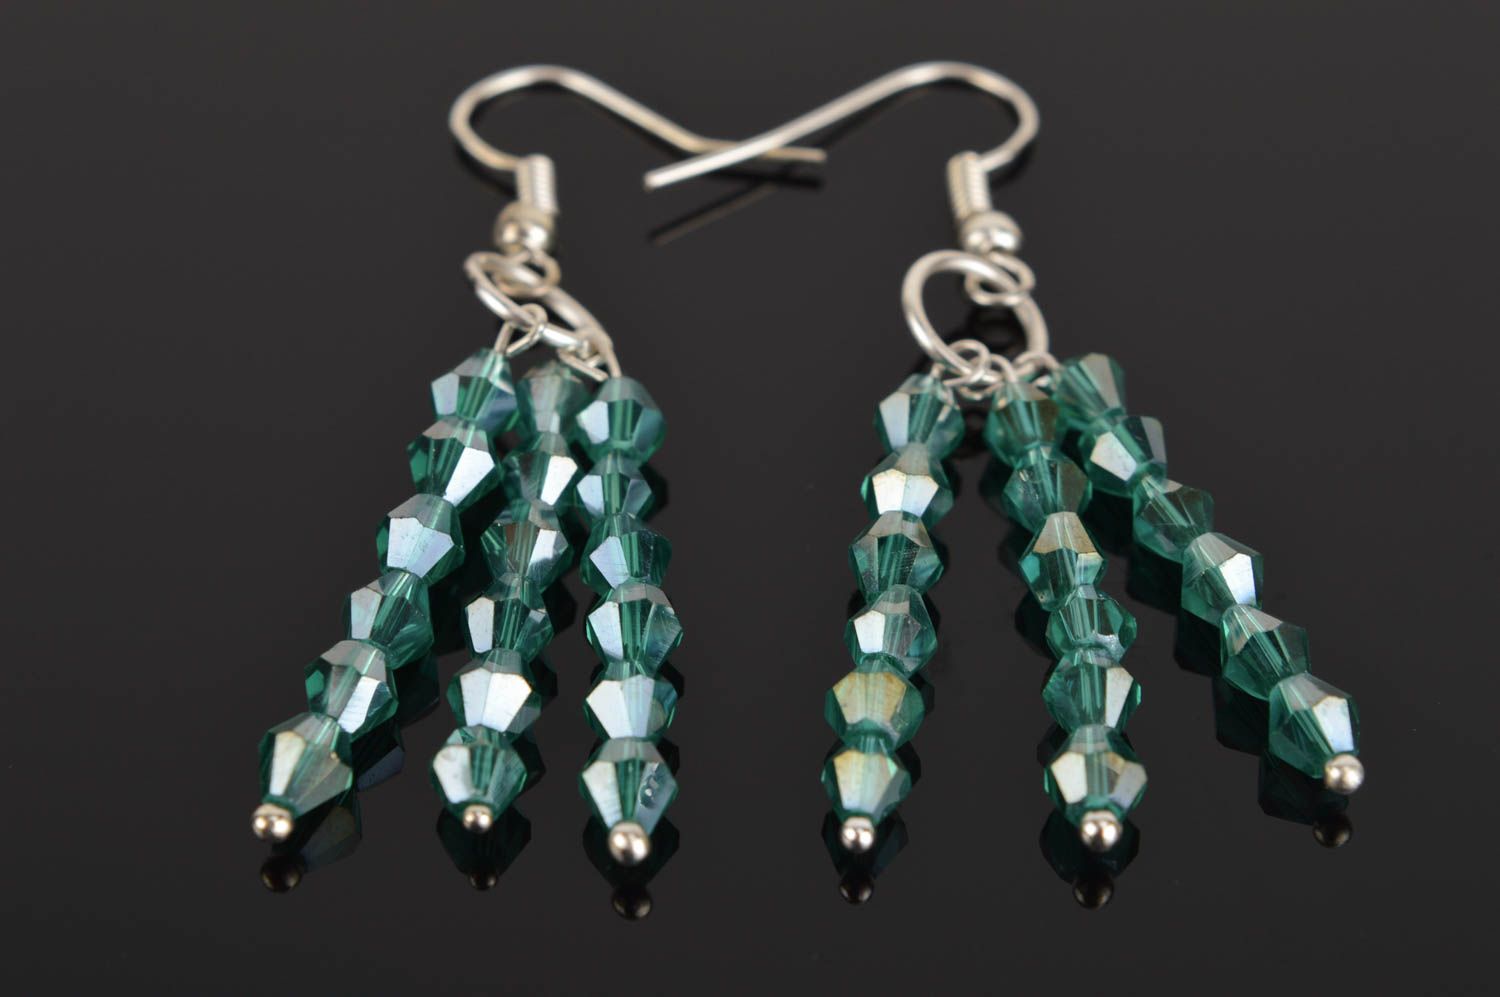 Crystal earrings handmade jewelry earrings with charms fashion jewelry photo 1